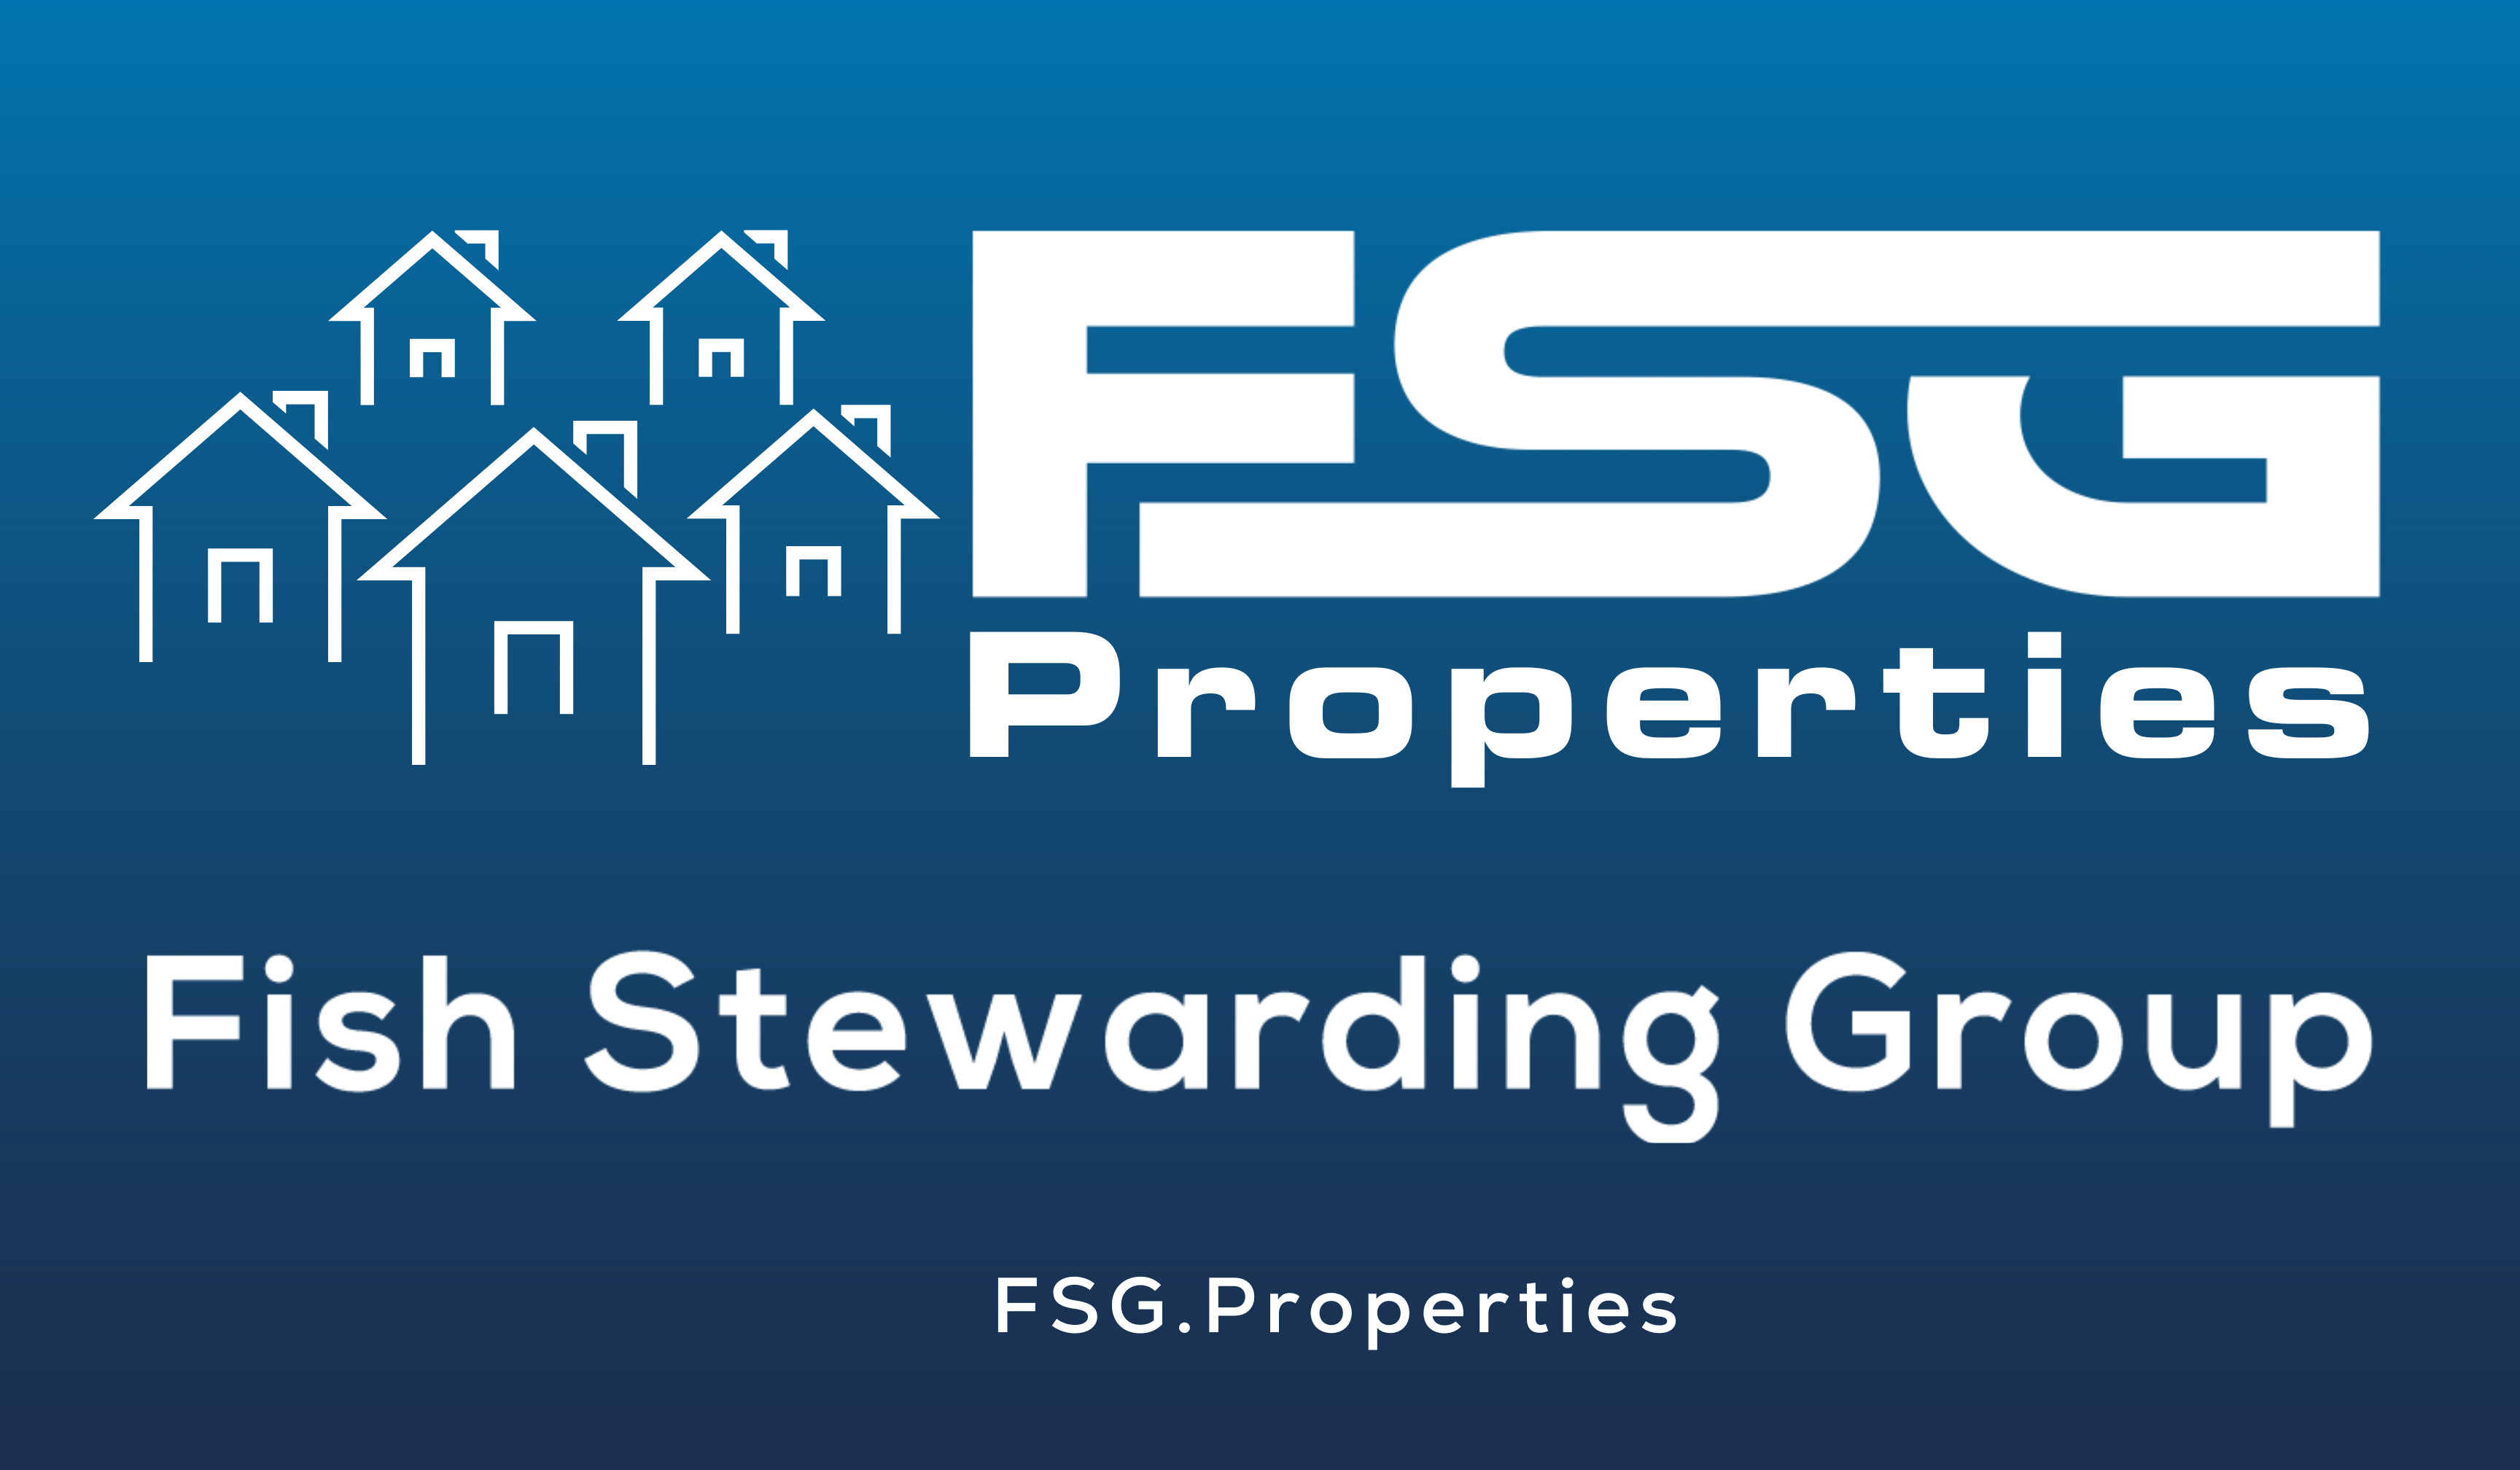 FSG Properties, fish stewarding group properties